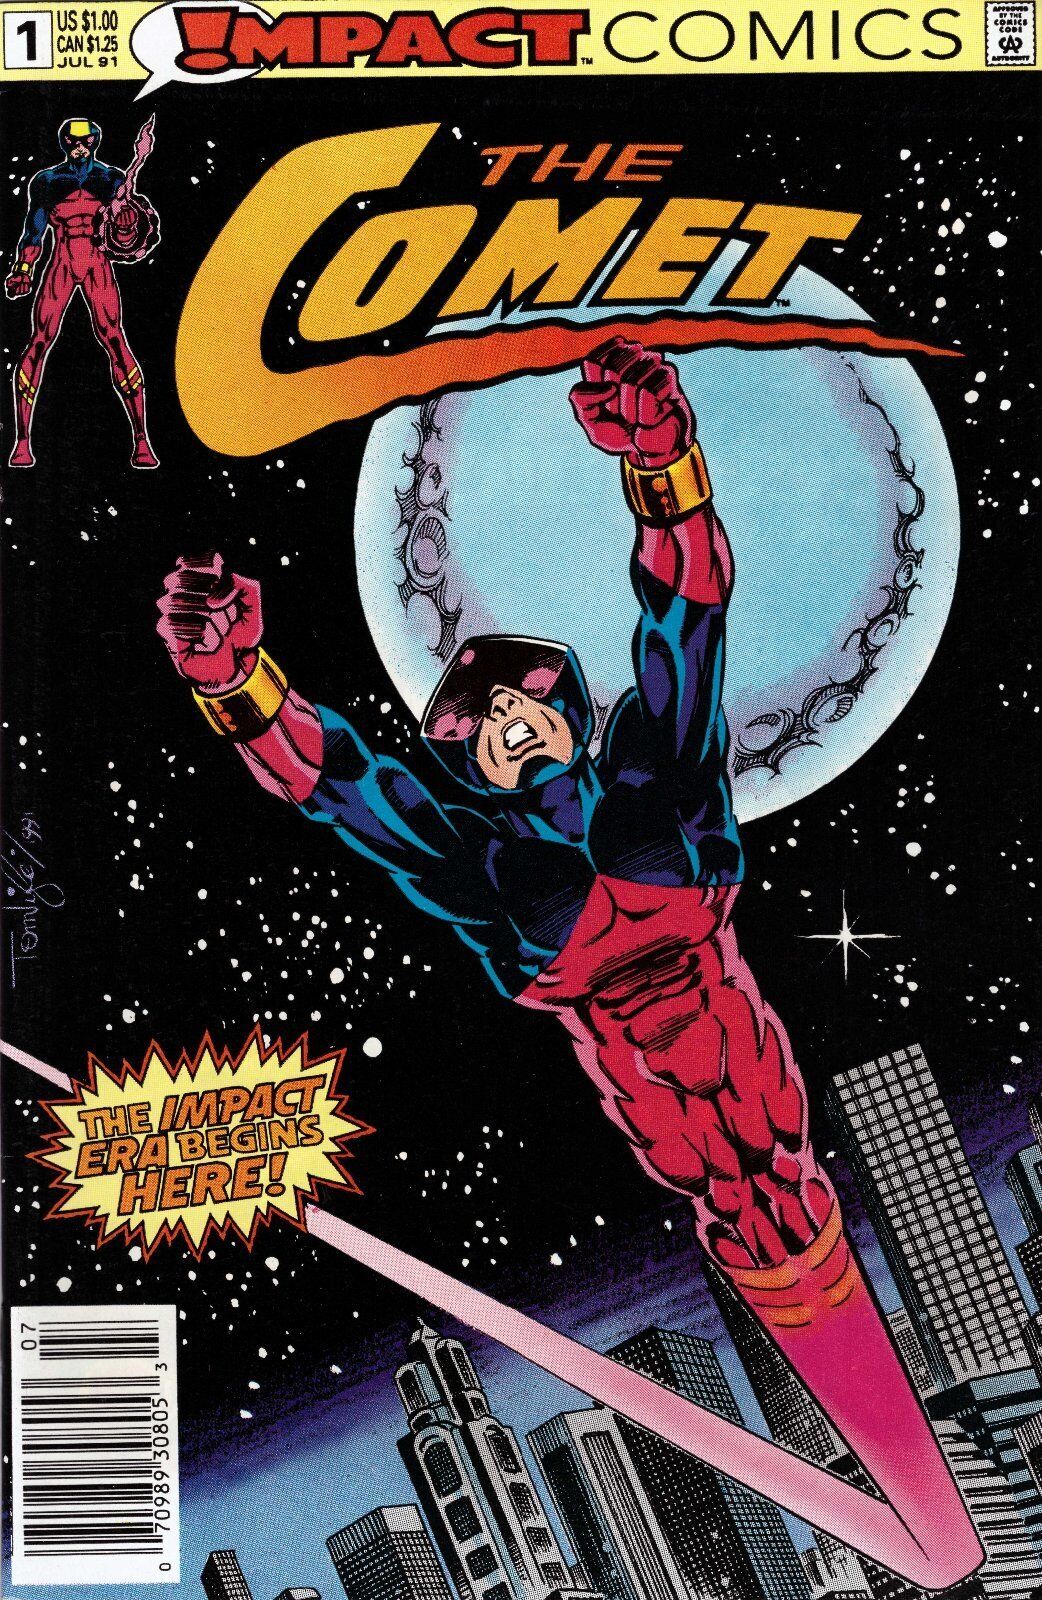 The Comet #1 Newsstand Cover (1991-1992) DC Comics